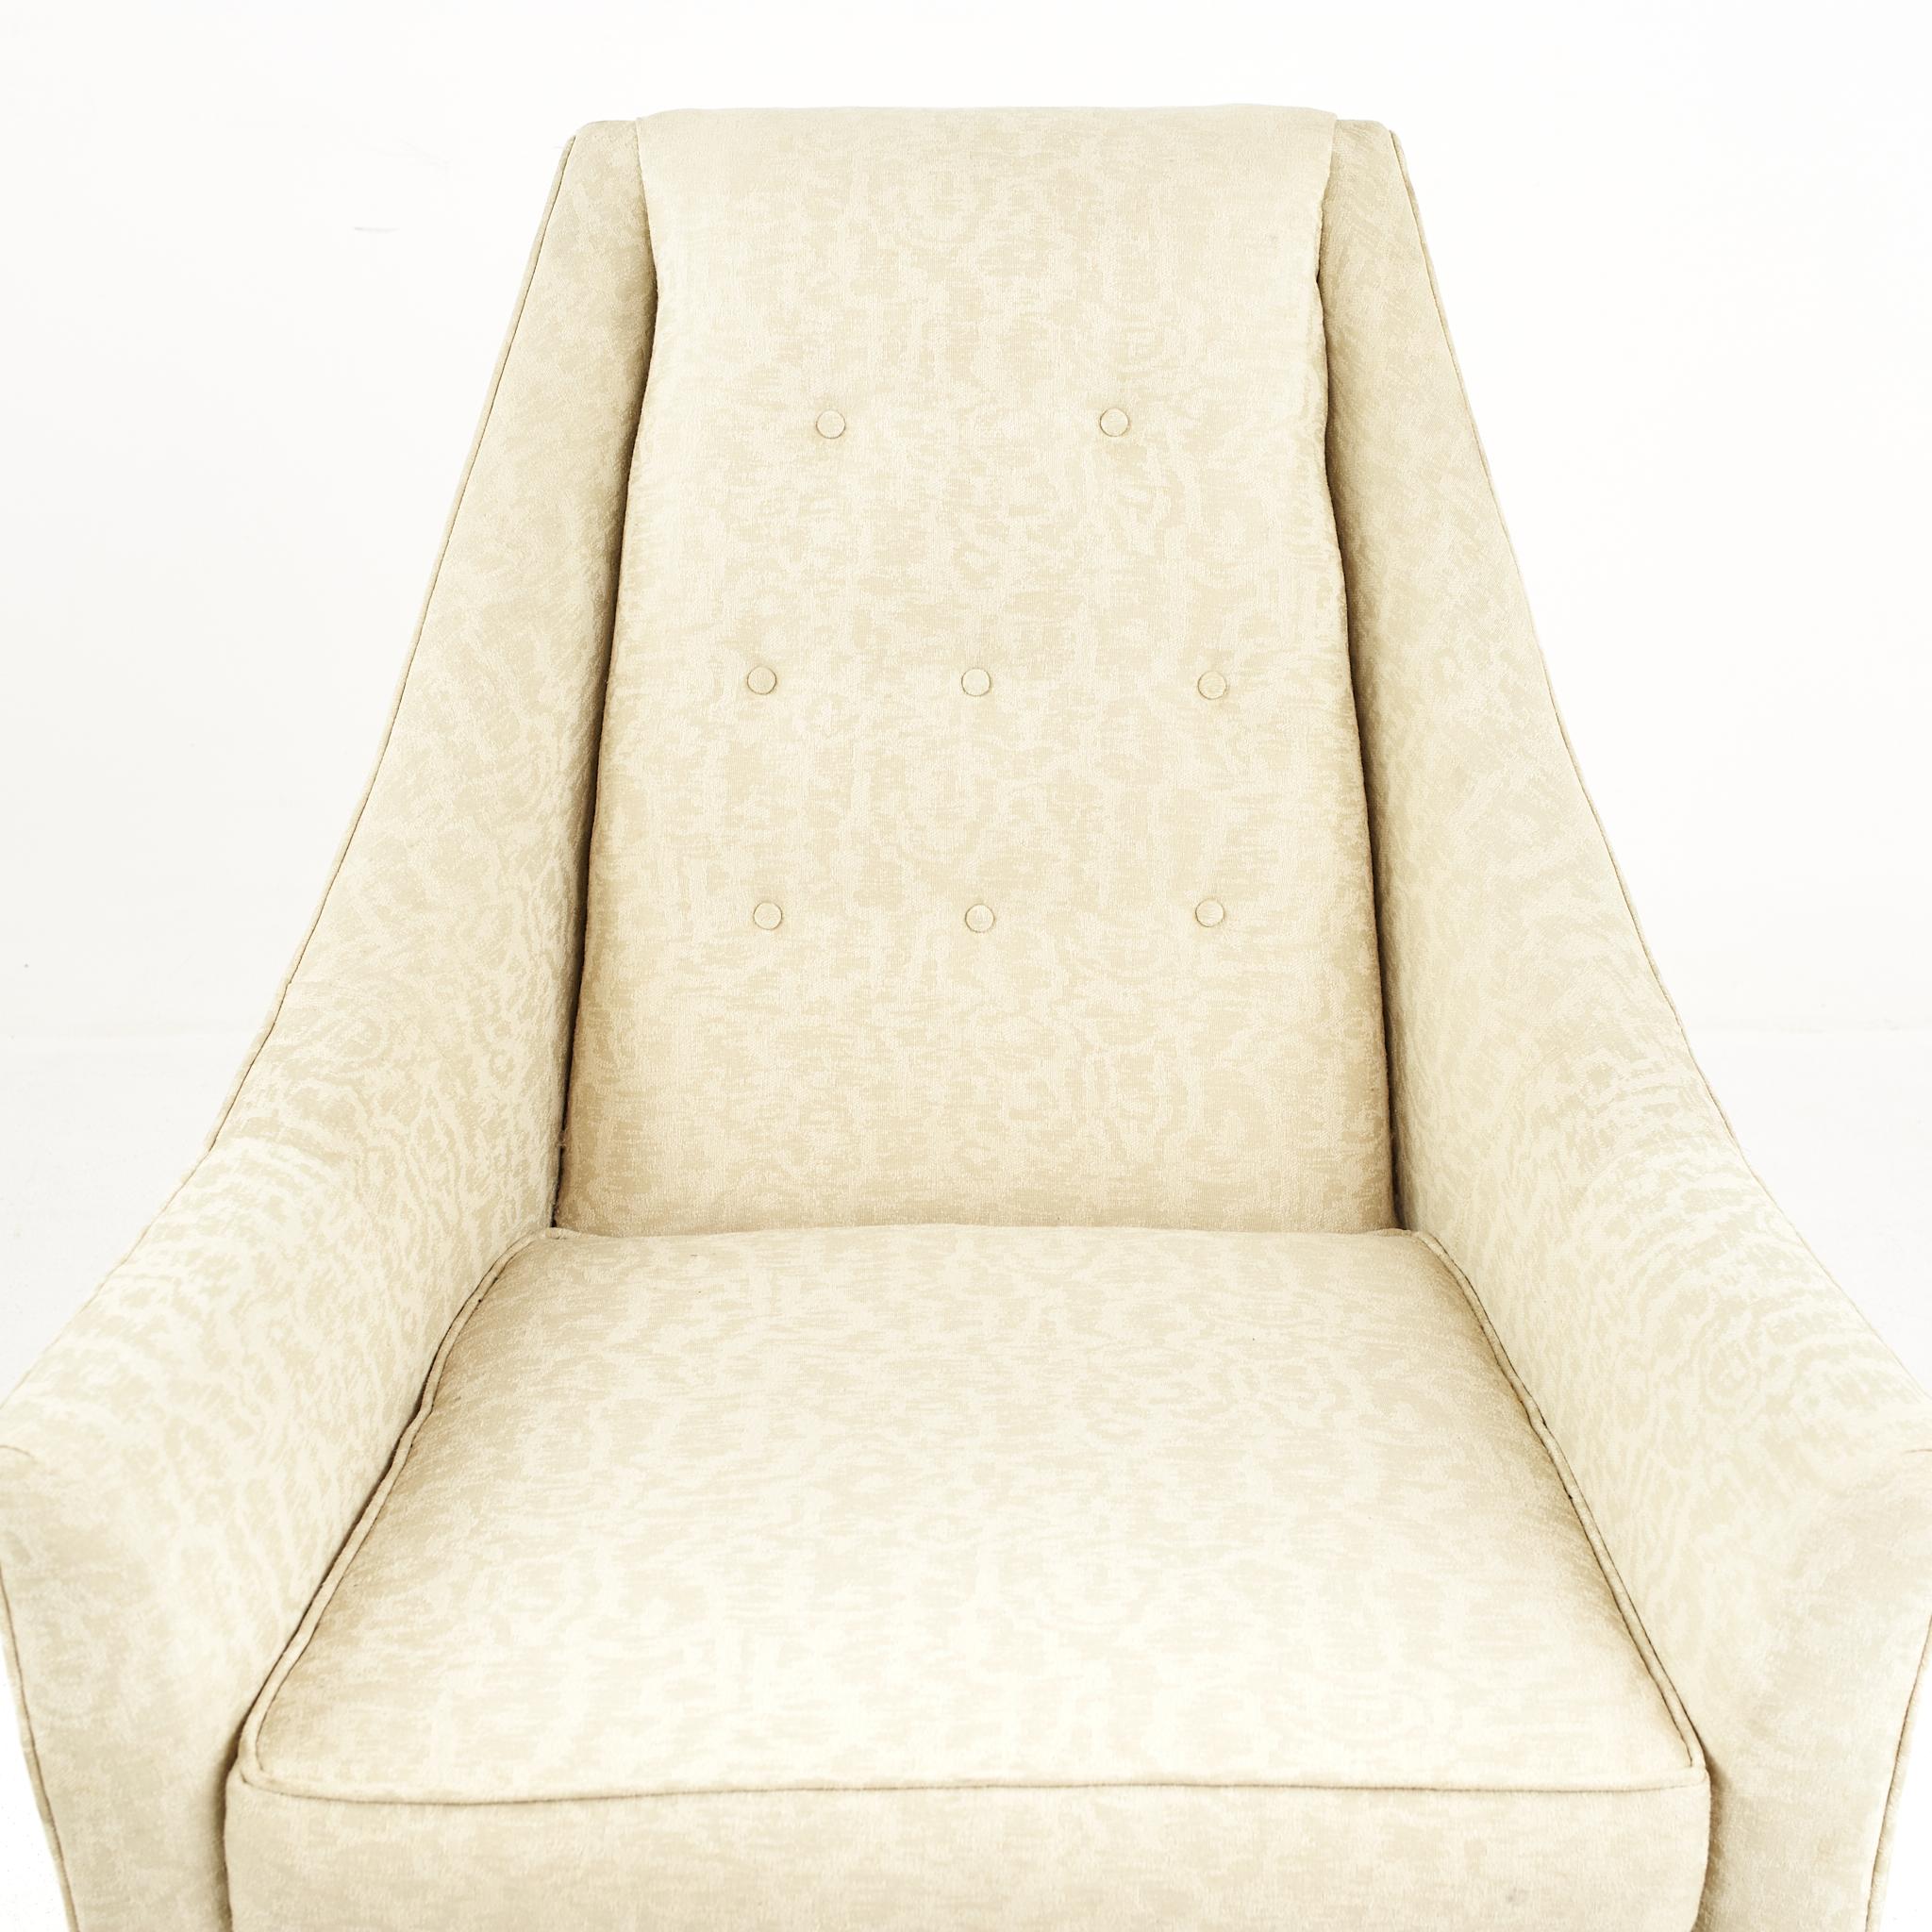 Paul McCobb Symmetric Group Mid Century Highback Upholstered Lounge Chair 1